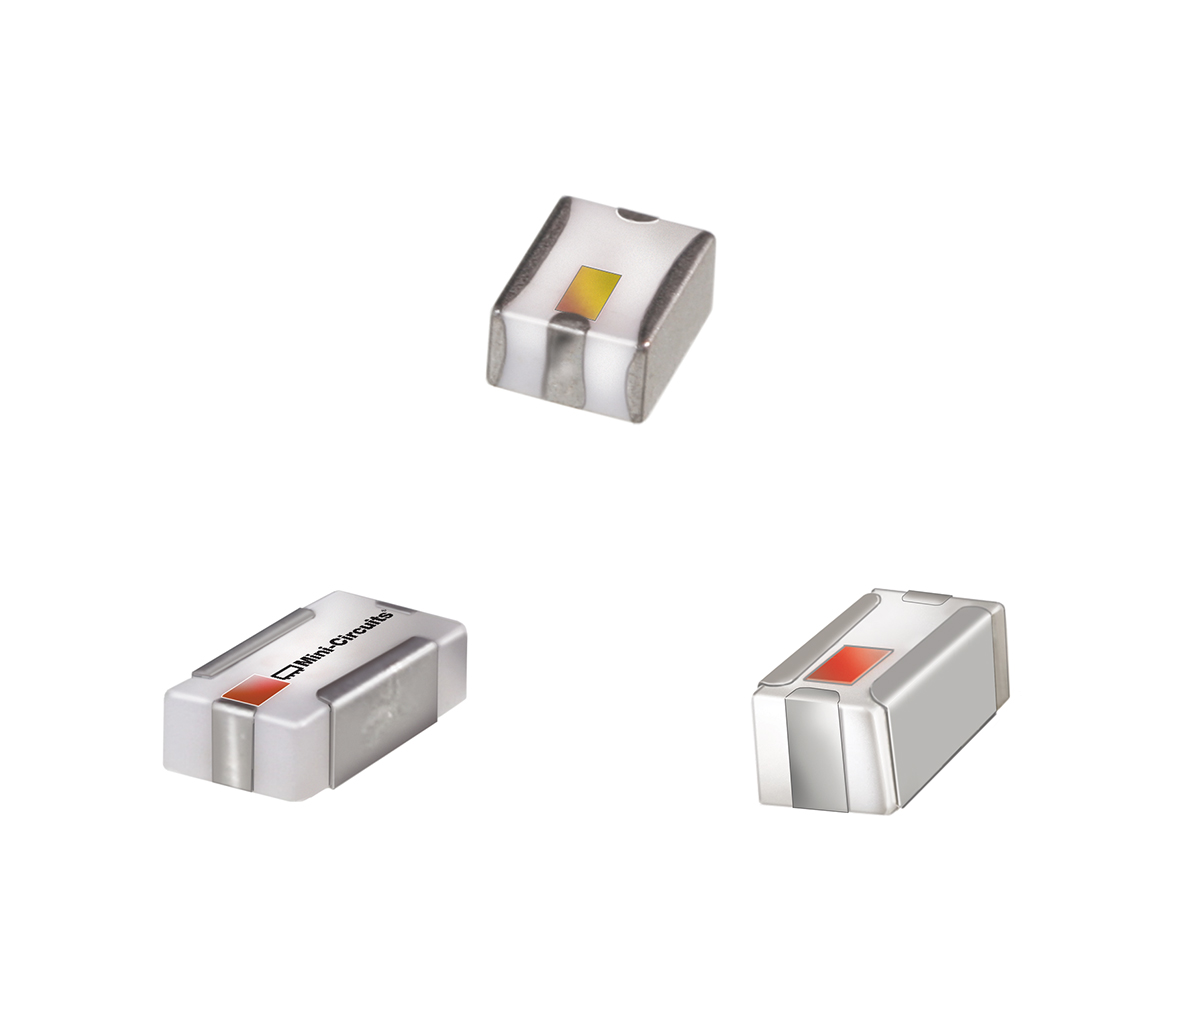 Three LTCC ceramic bandpass filters